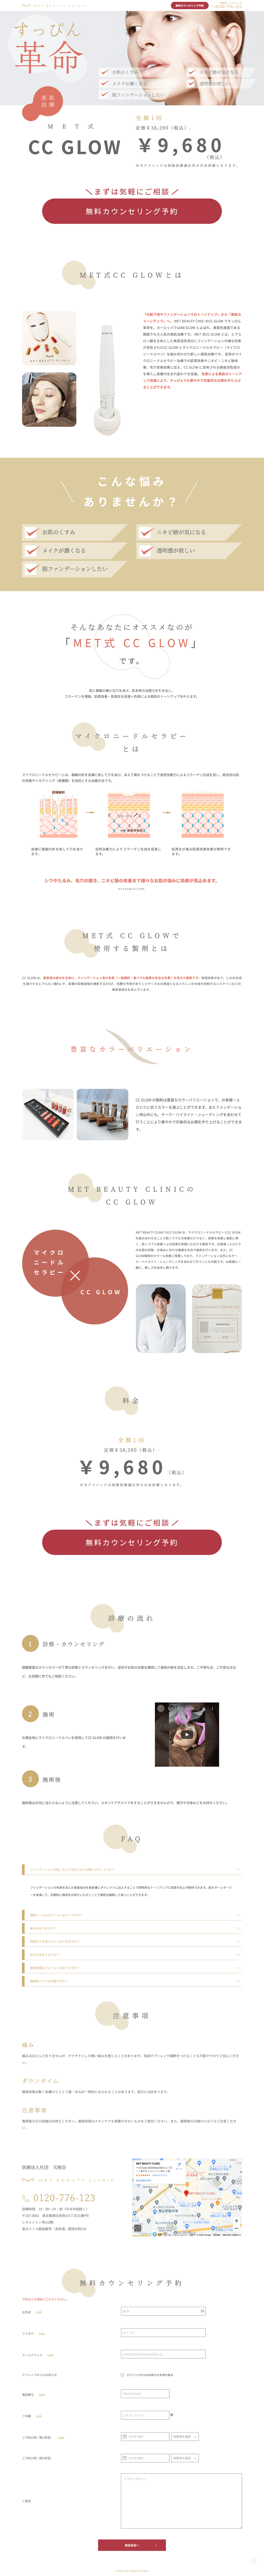 Met beauty clinic  CC GLOW LP制作